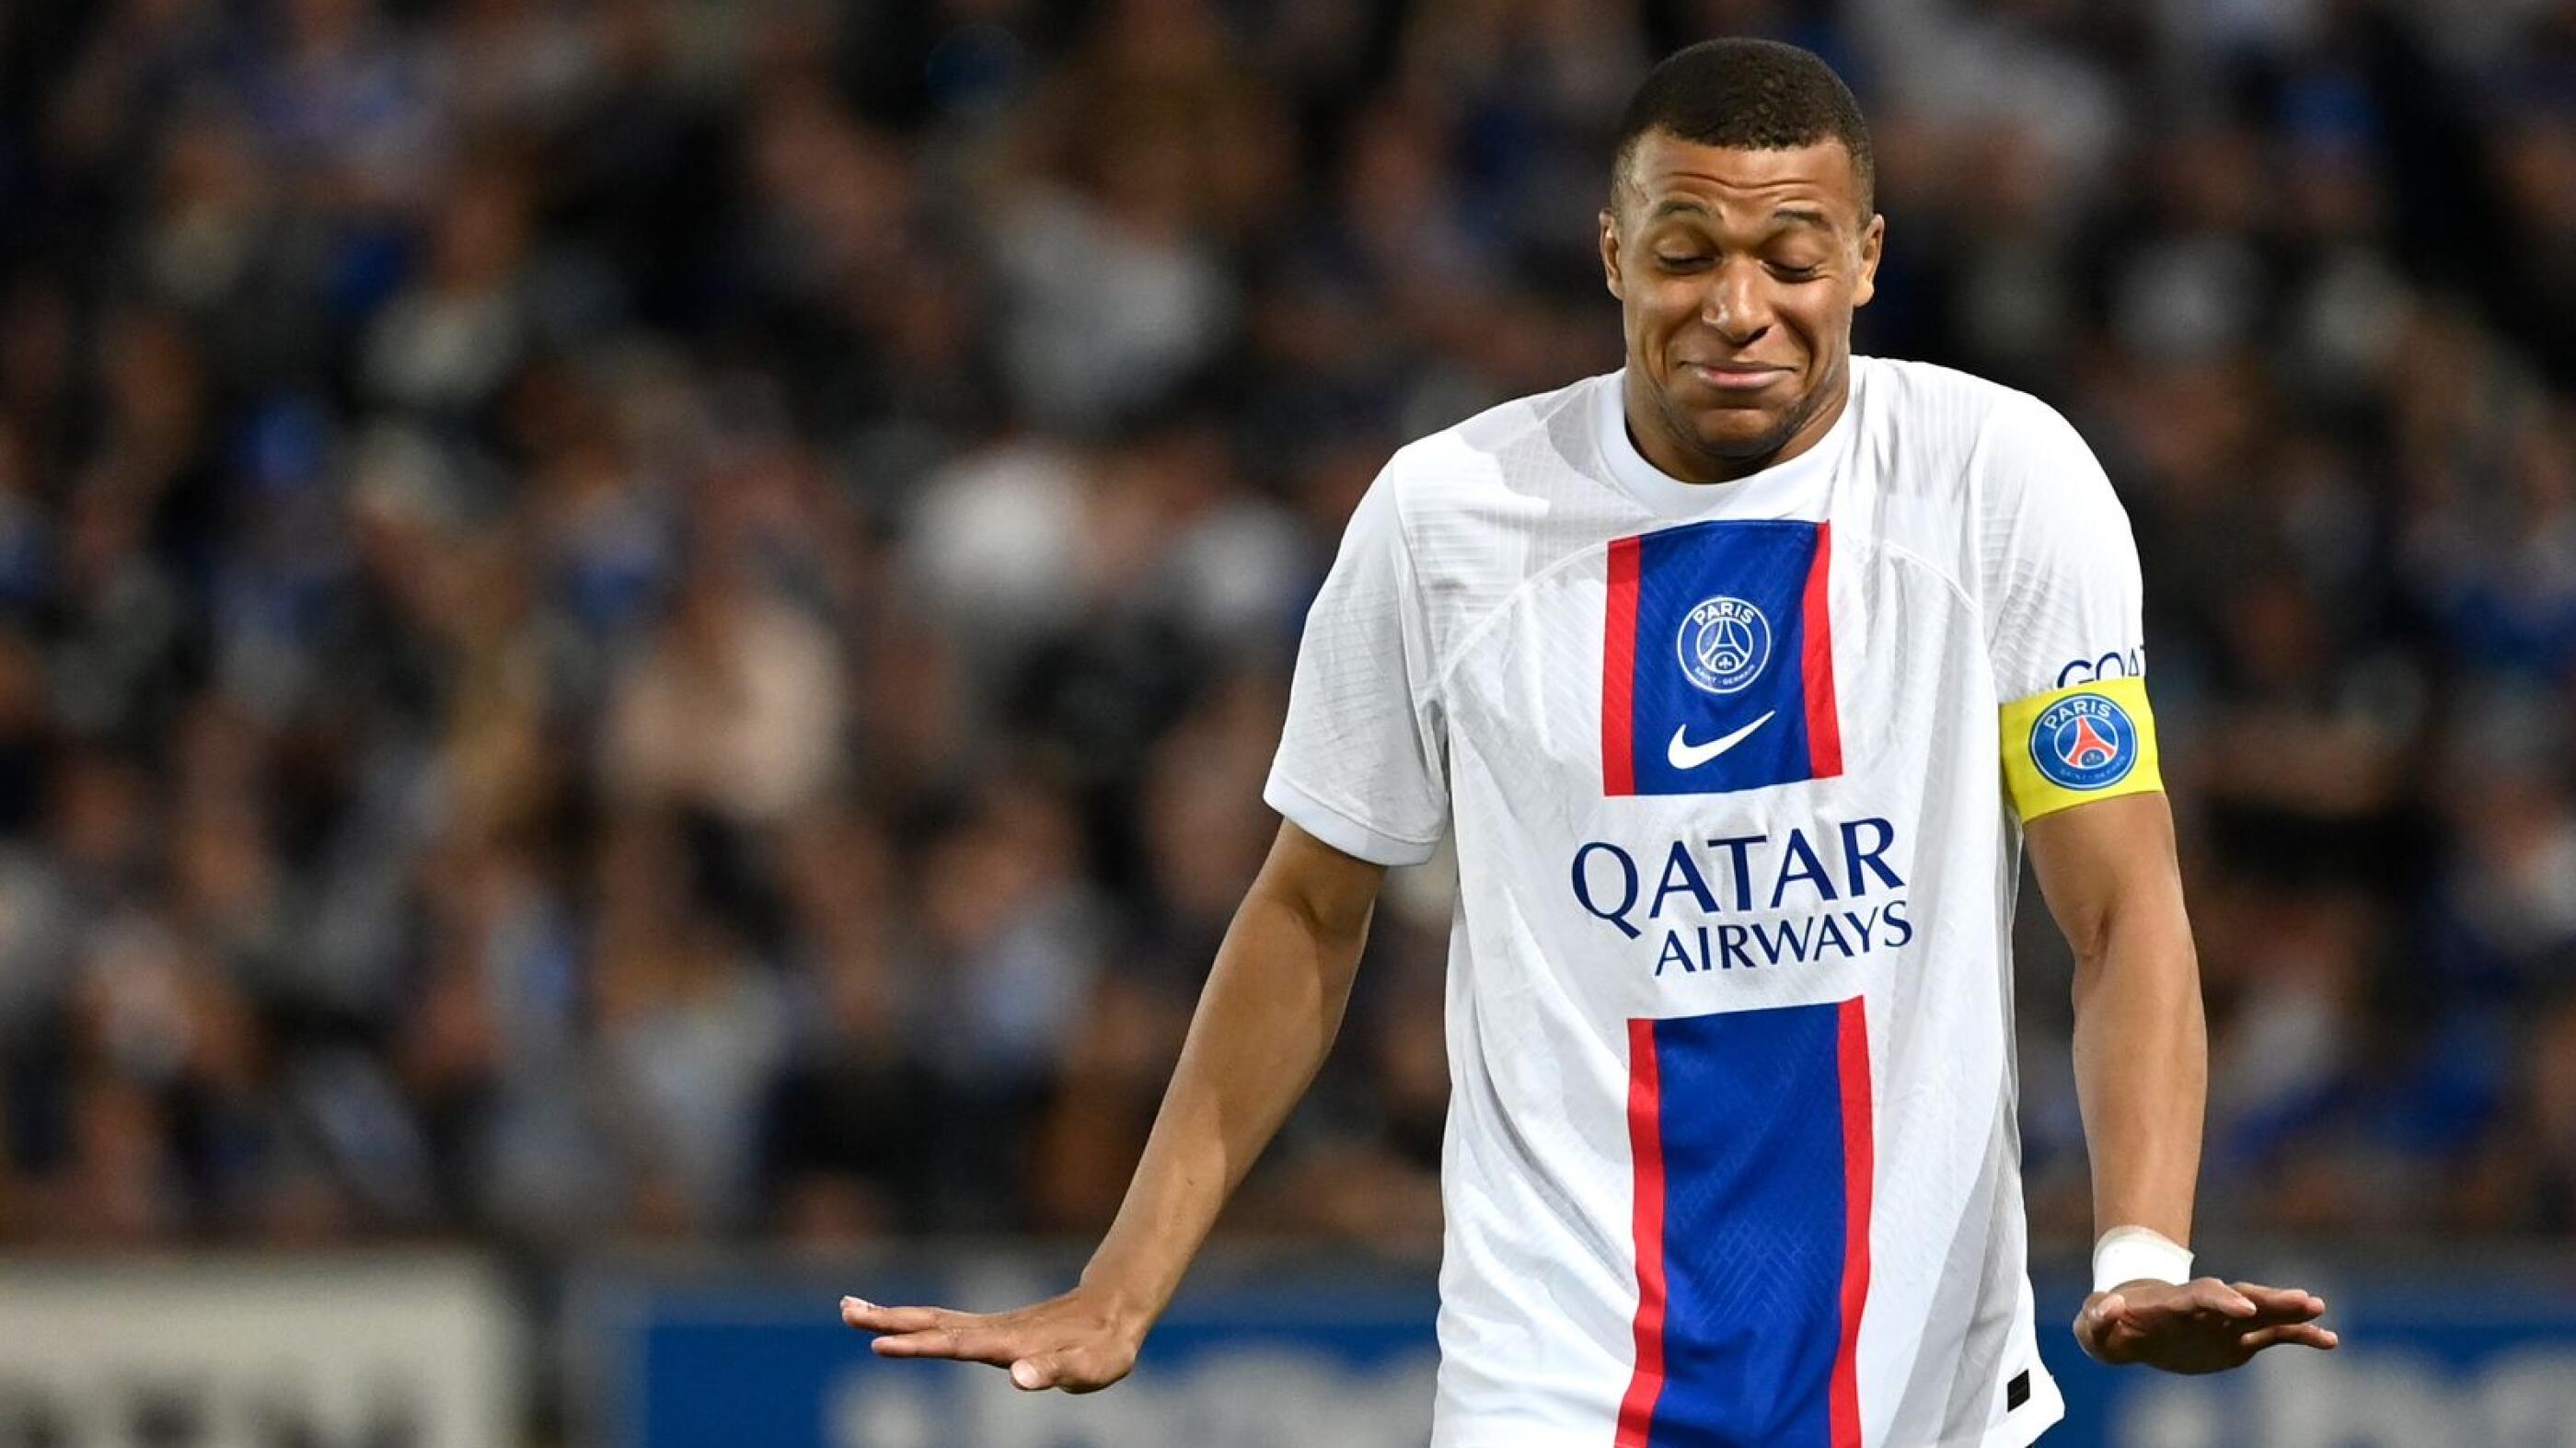 Forward Kylian Mbappe has been reinstated to Paris Saint-Germain's first team